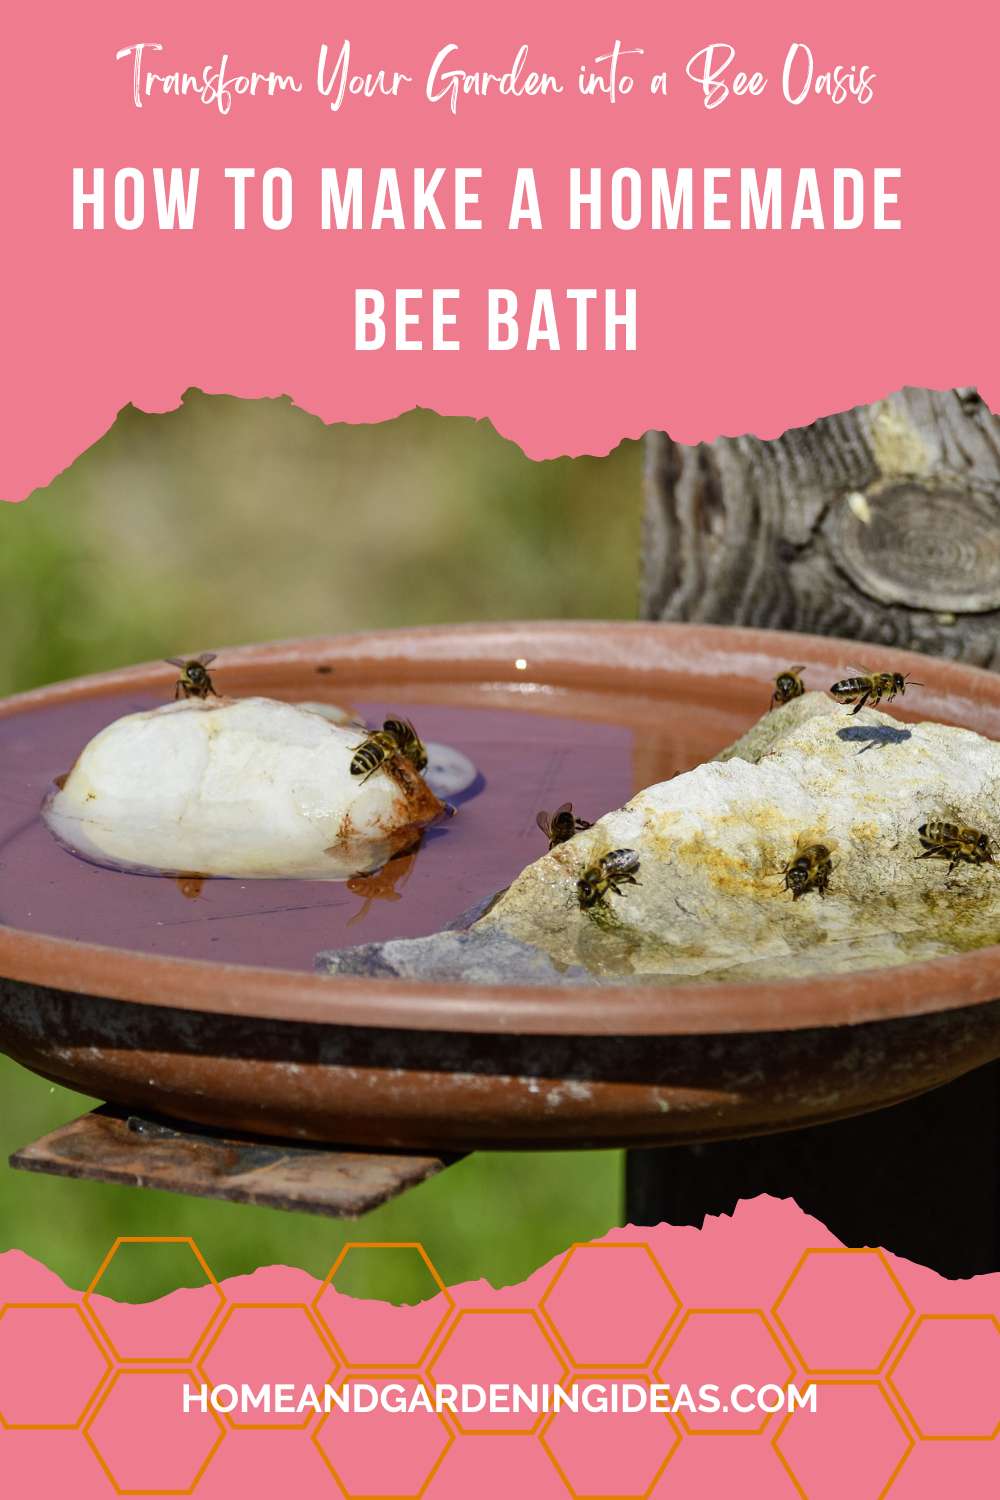 How to Make a Homemade Bee Bath